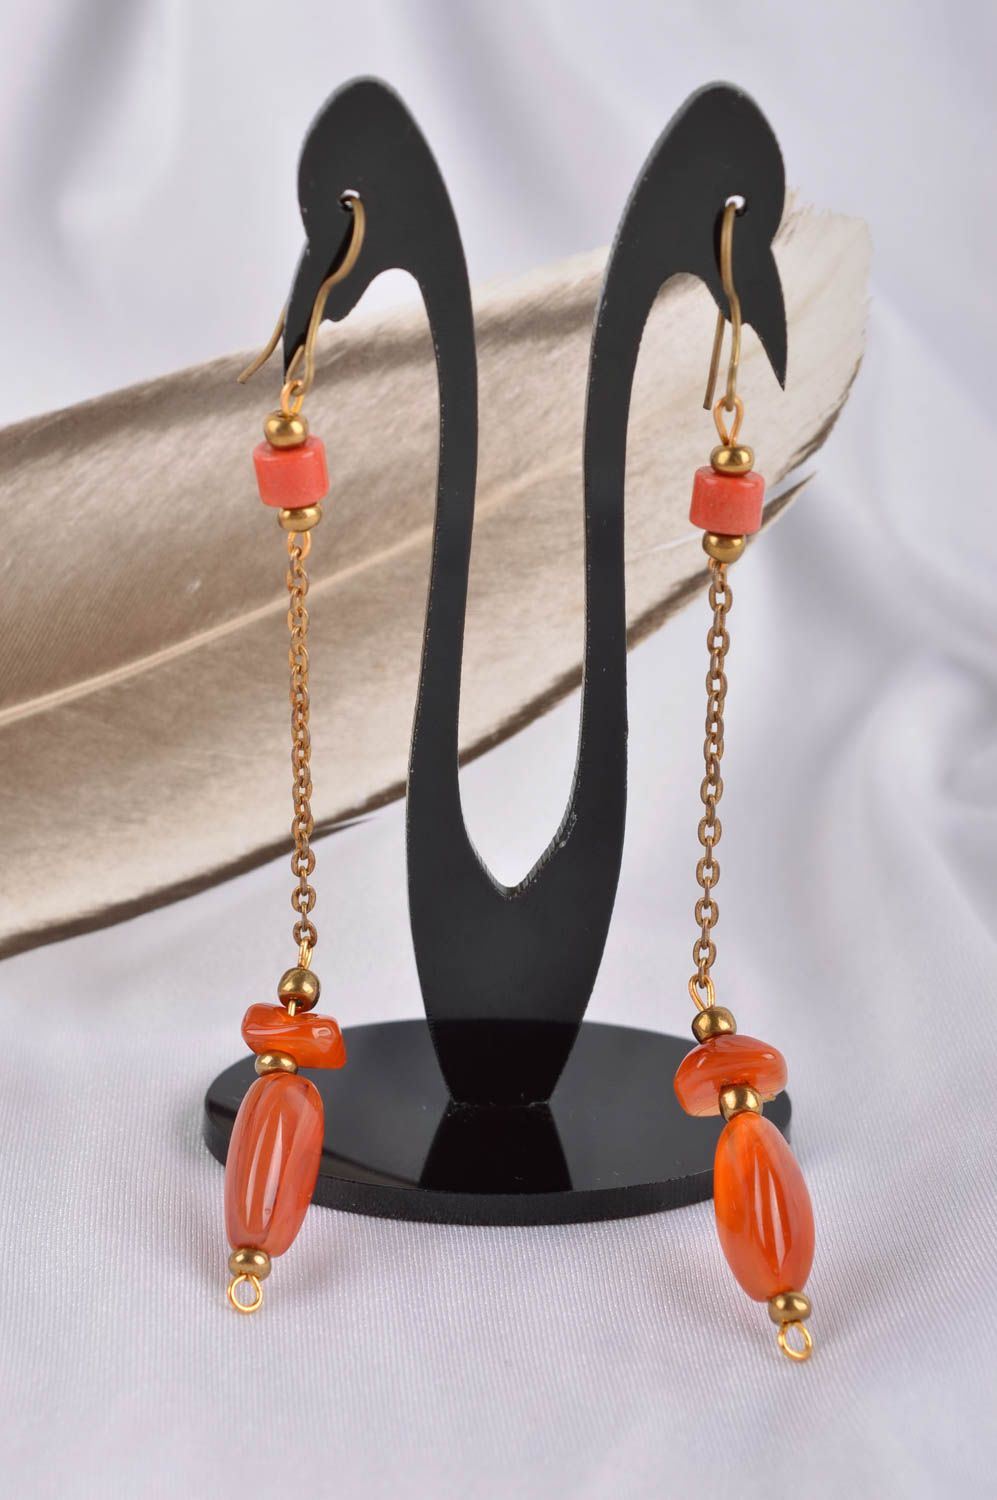 Handmade long earrings jewelry with natural stones fashion jewelry women jewelry photo 1